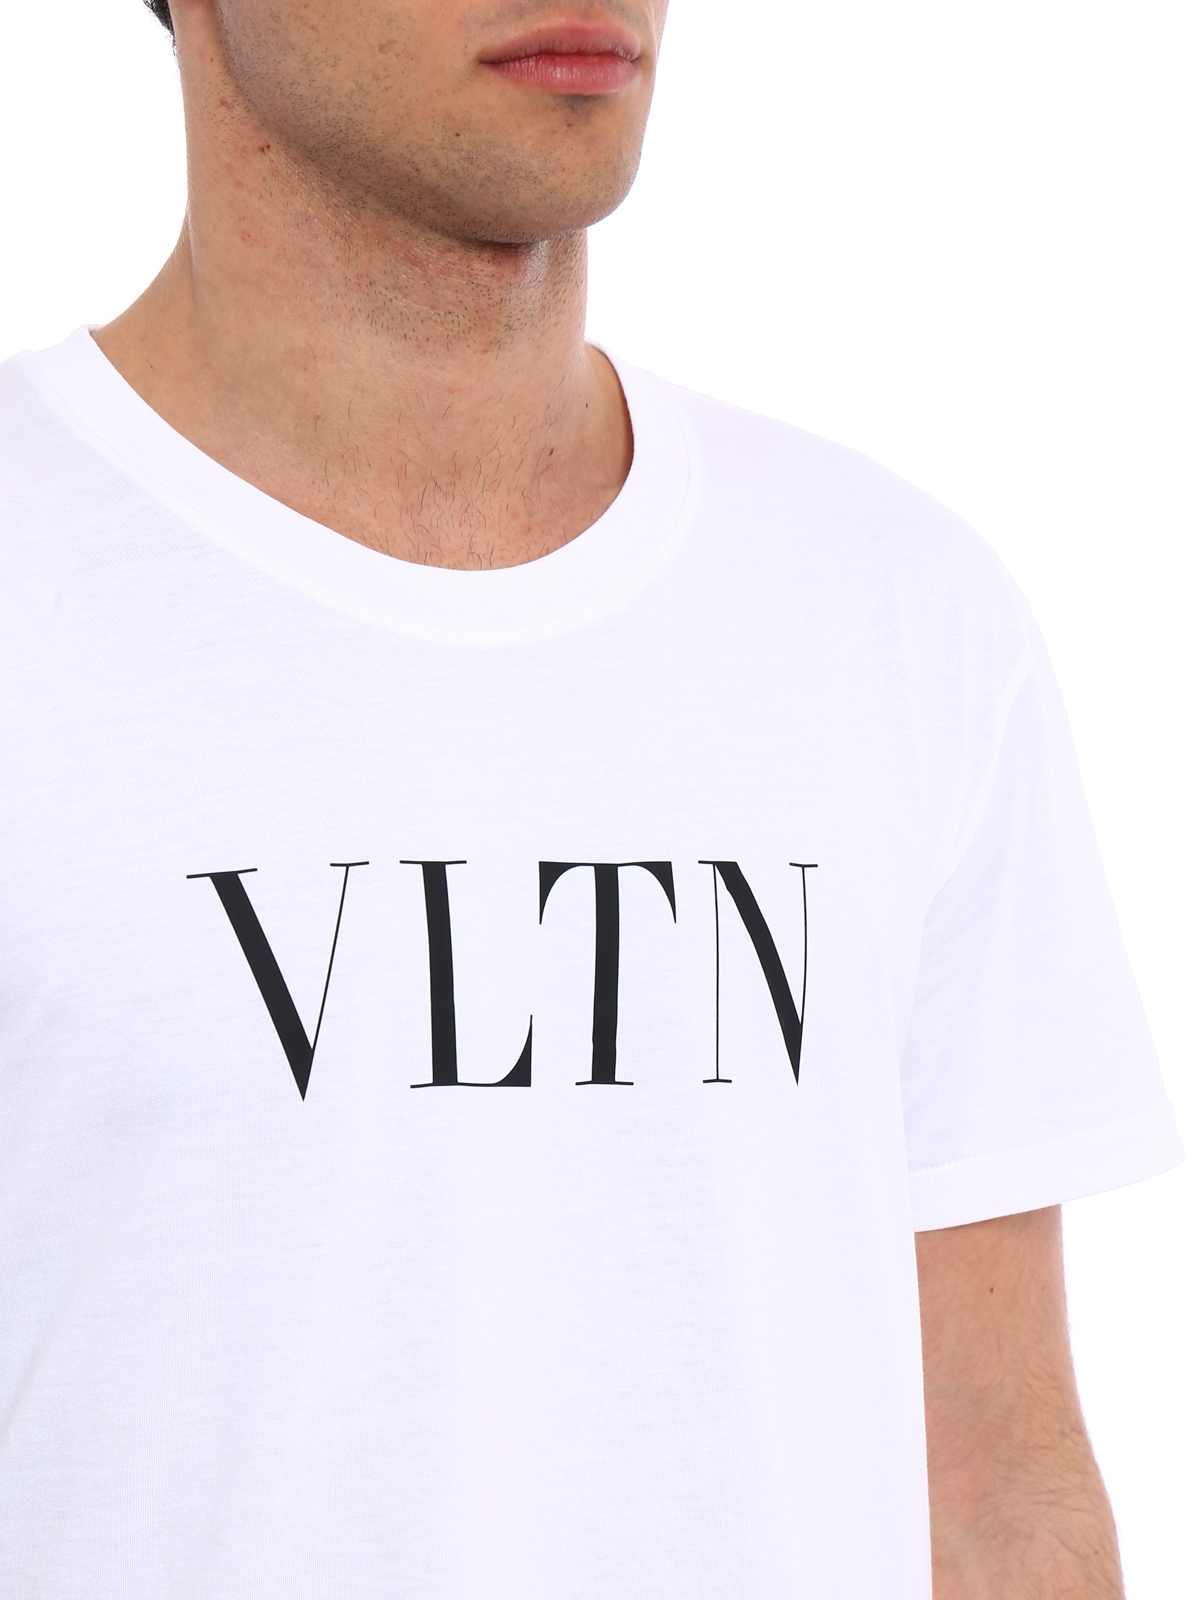 Tシャツ Valentino - Tシャツ - Vltn - PV0MG10V3LEA01 | iKRIX.com